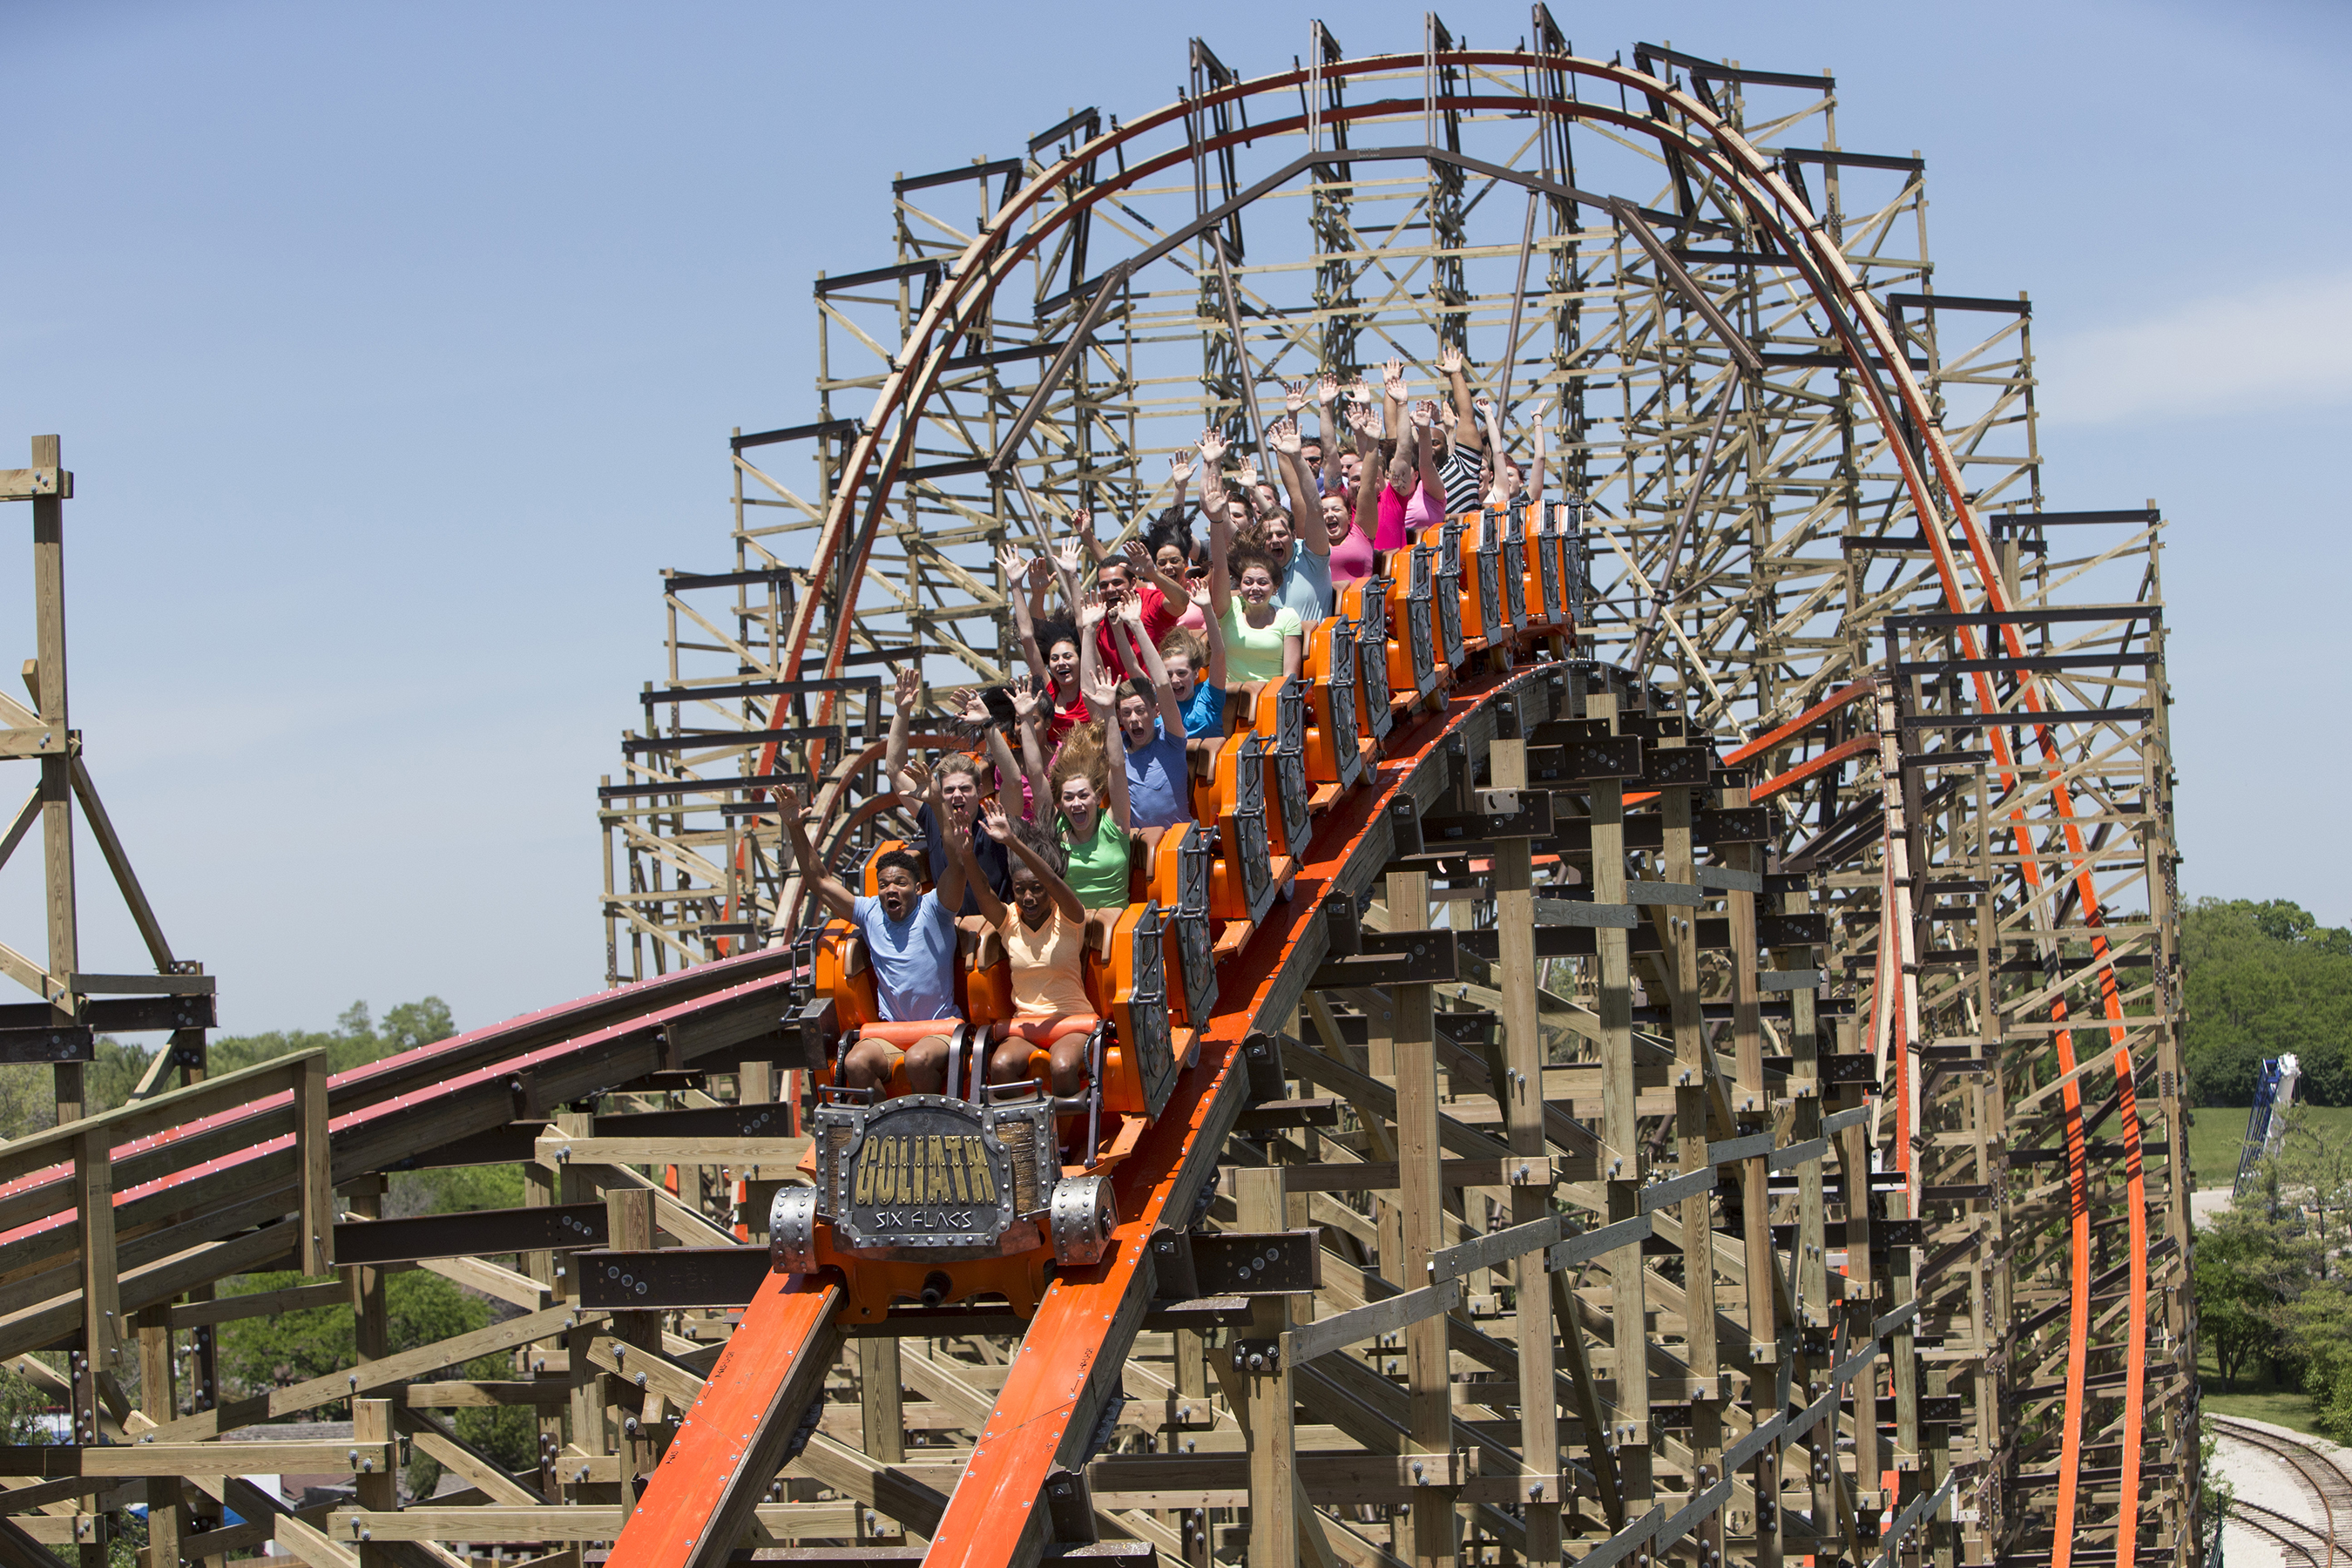 World's fastest wooden roller coaster